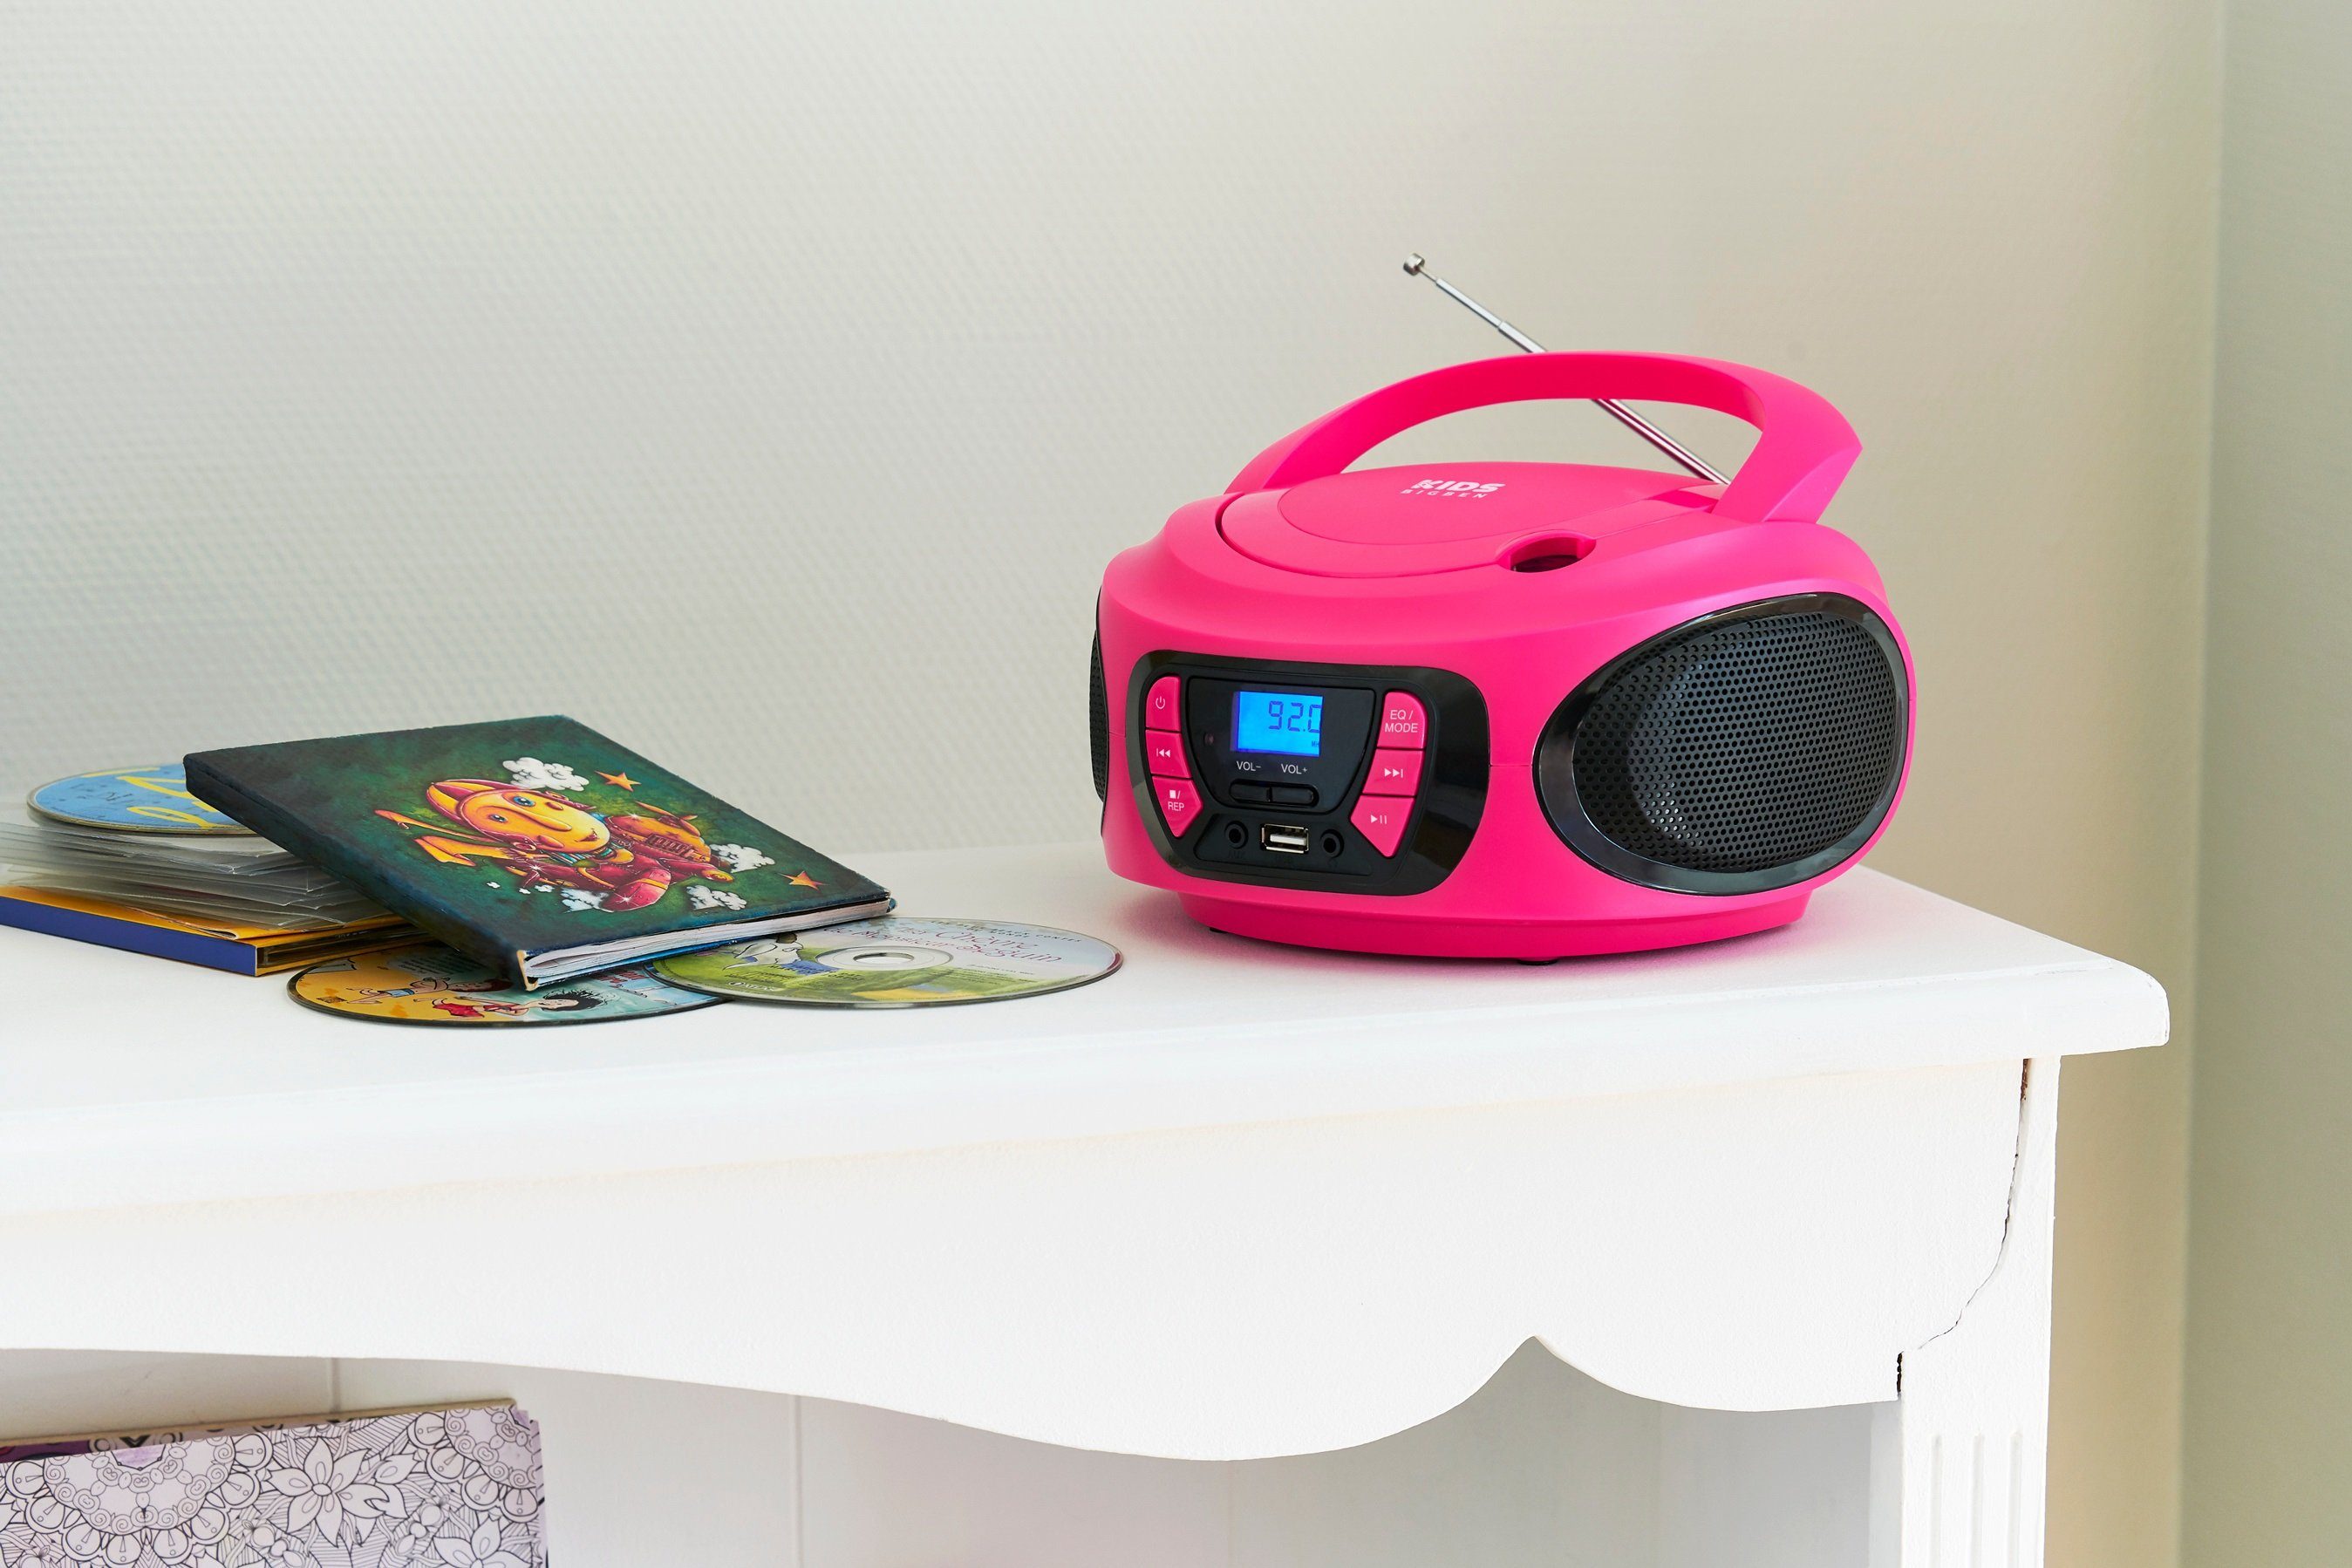 BigBen Kids Tragbares CD/Radio USB/BT AU387292 pink CD-Radiorecorder (FM-Tuner)